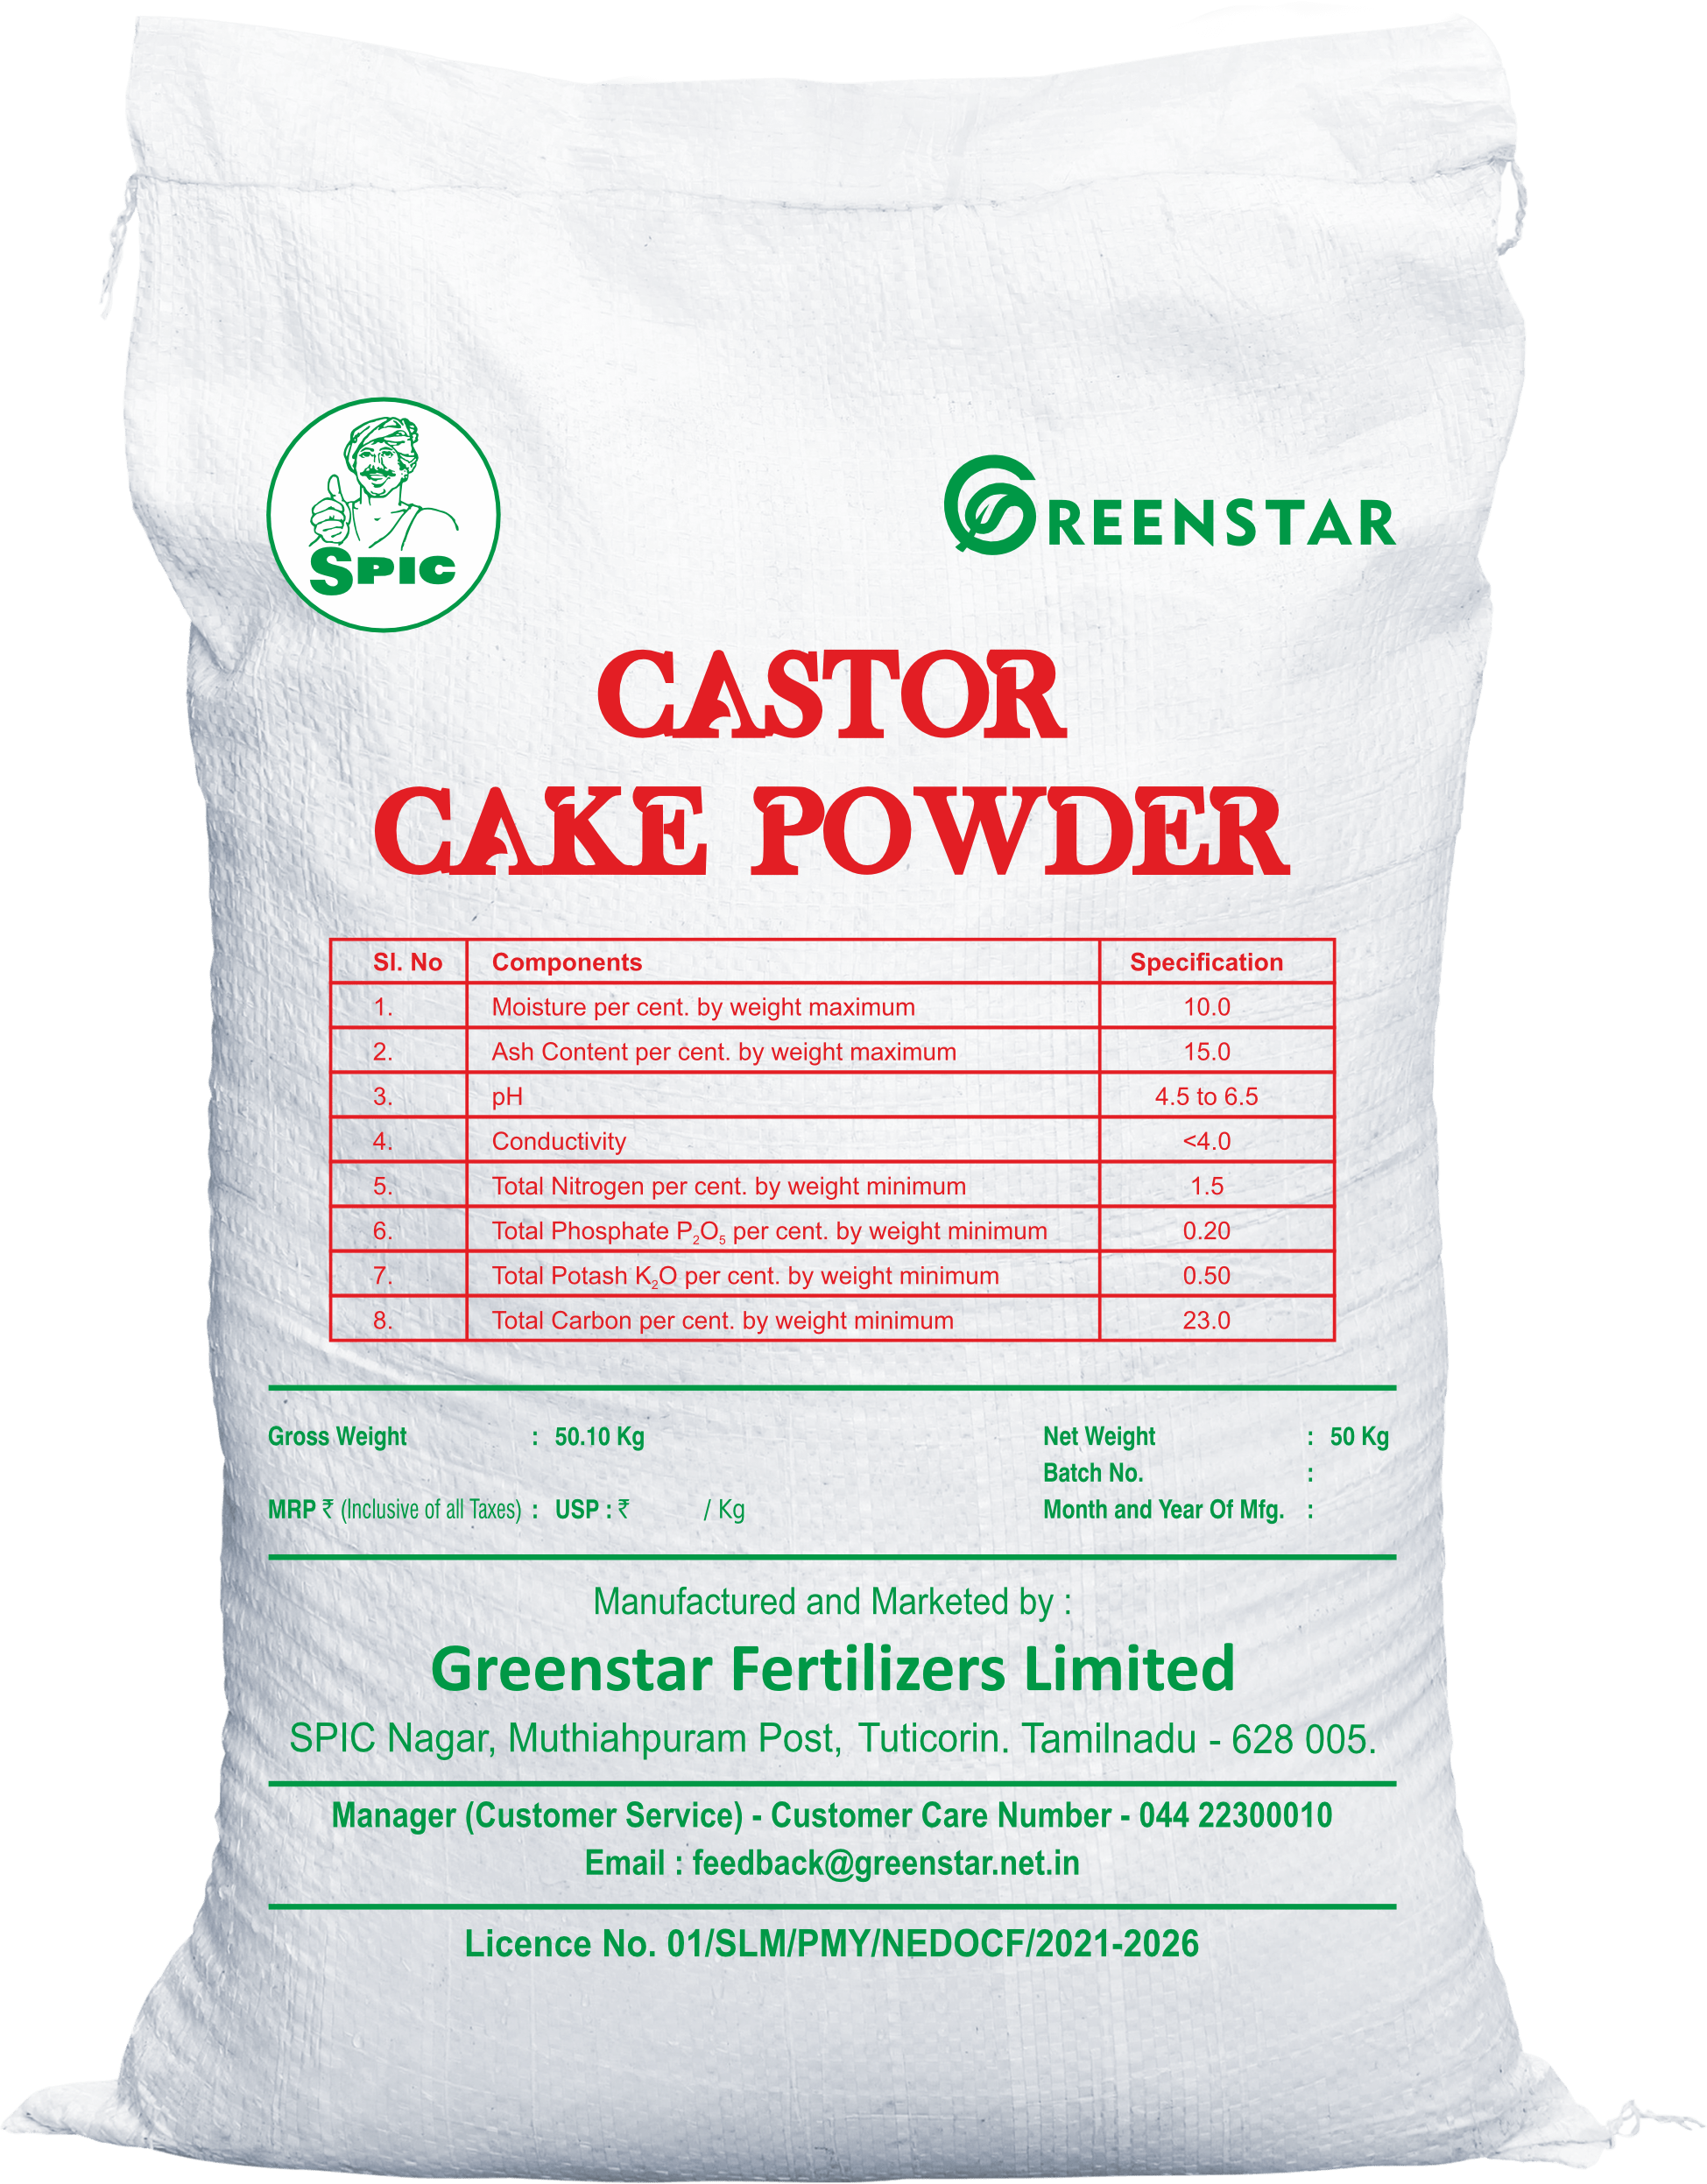 SPIC Castor Cake